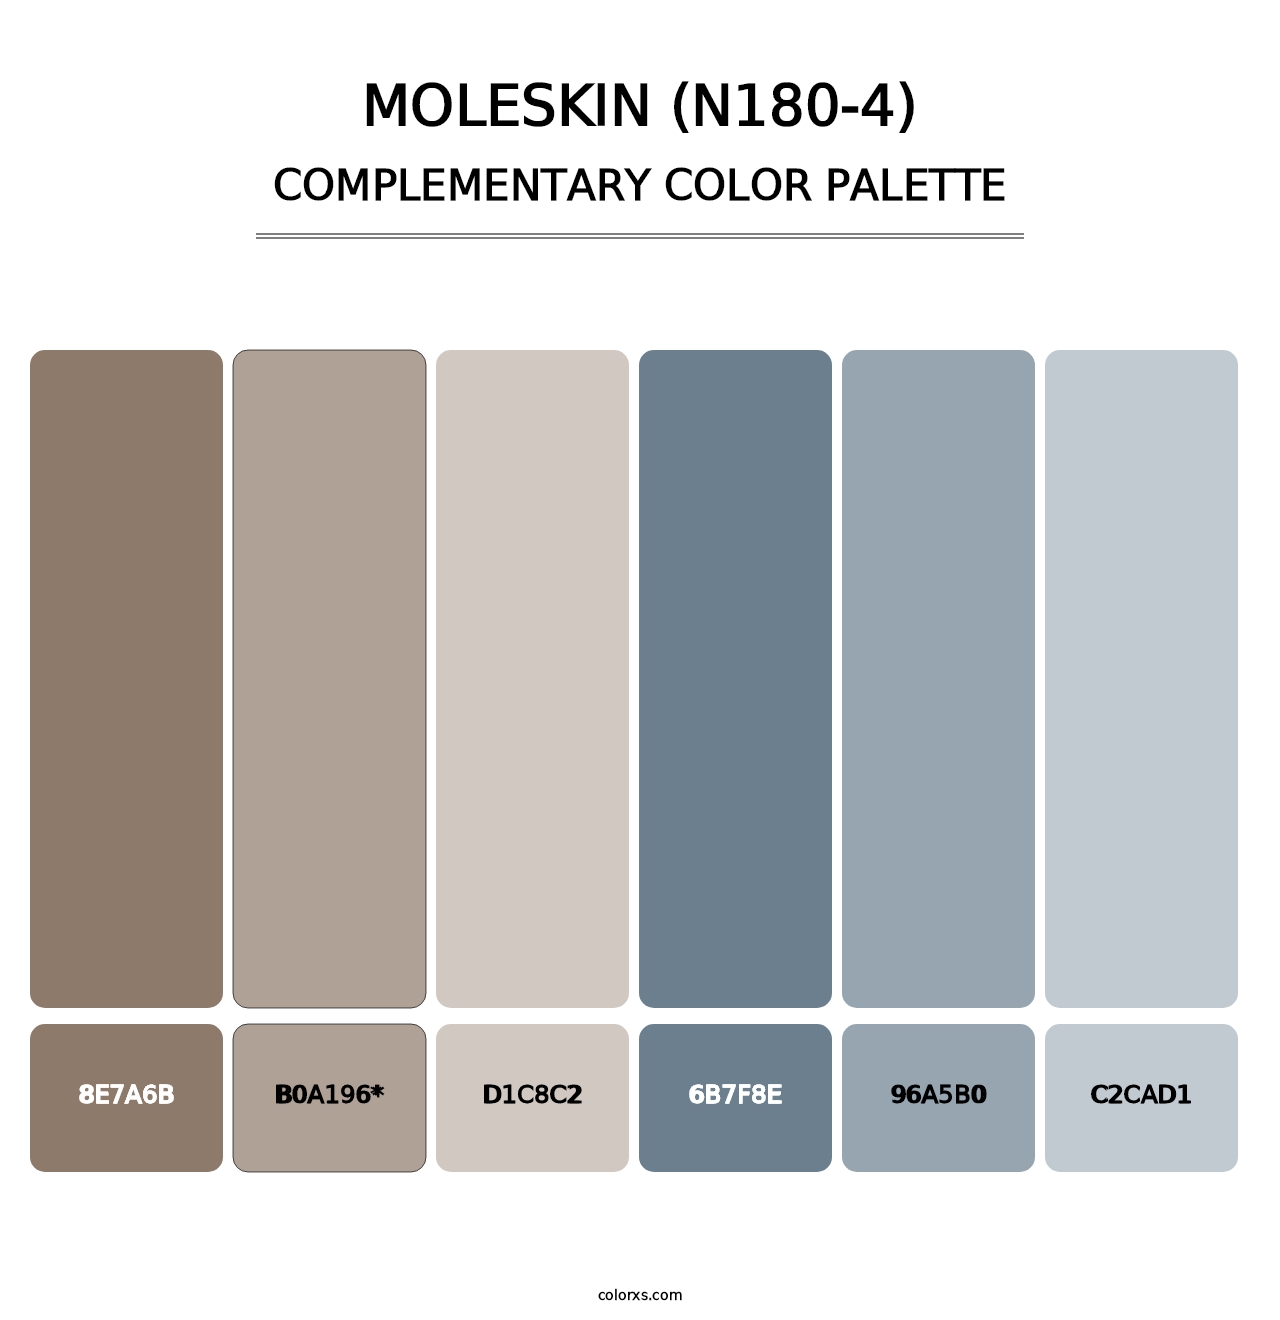 Moleskin (N180-4) - Complementary Color Palette